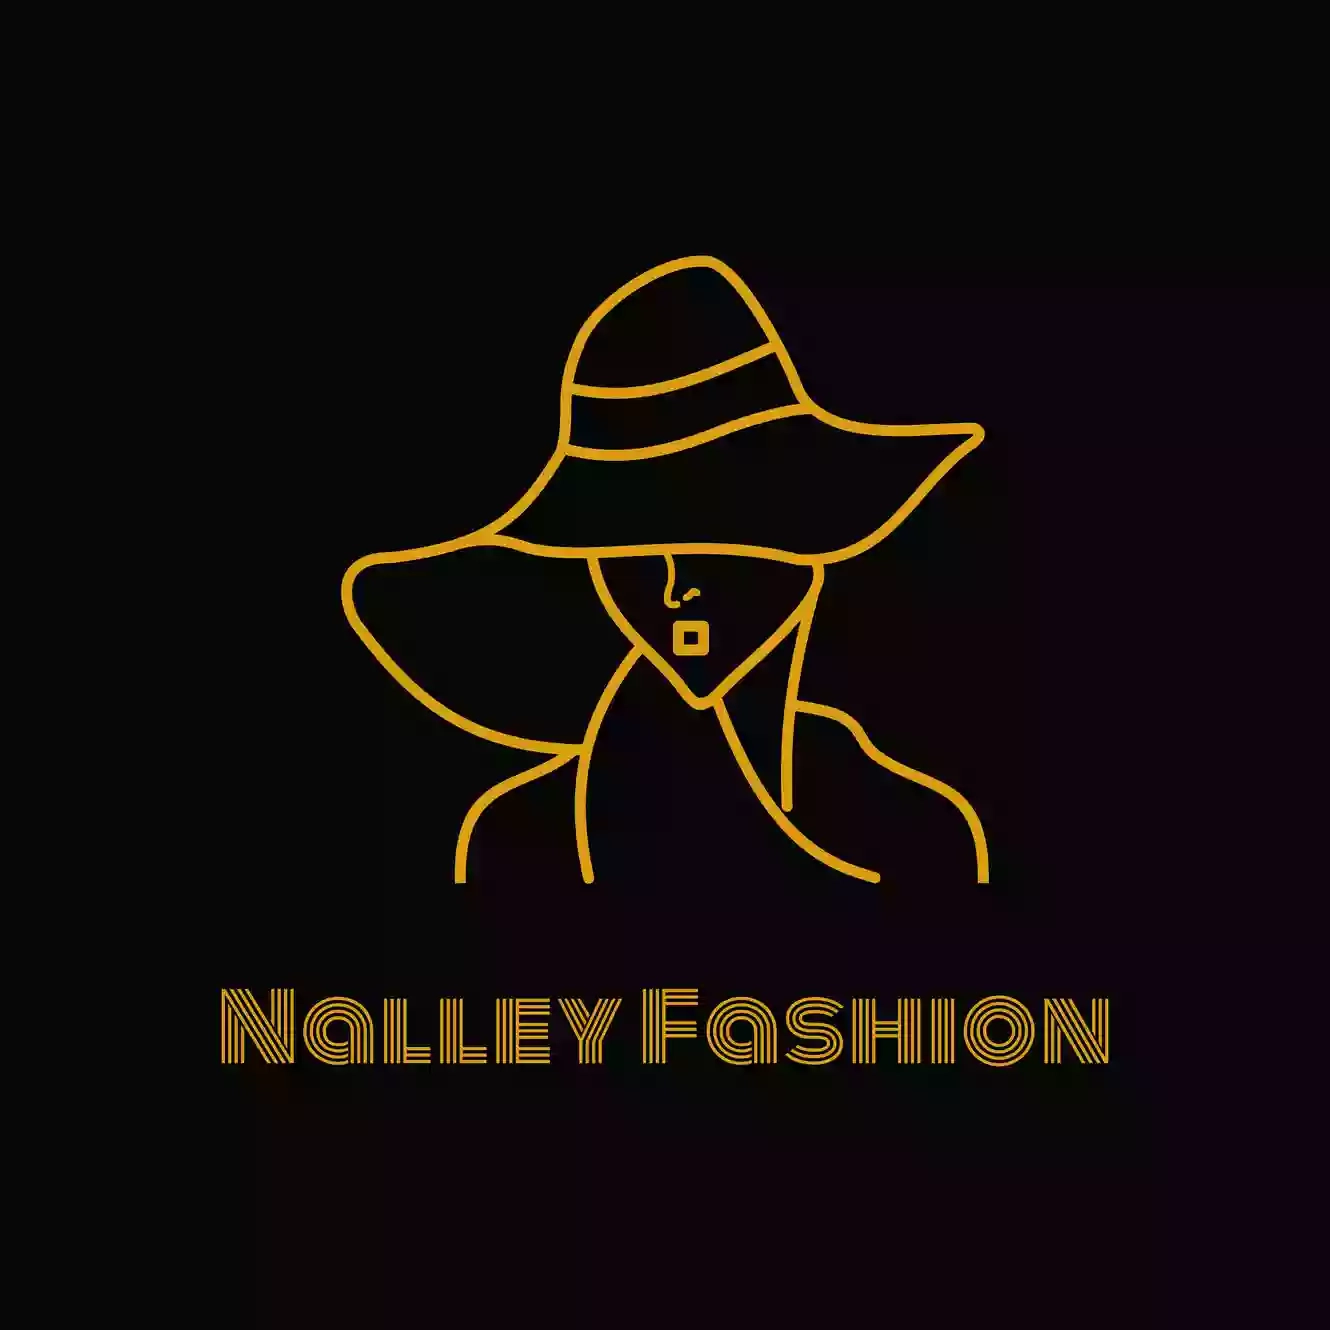 www.nalleyfashion.com